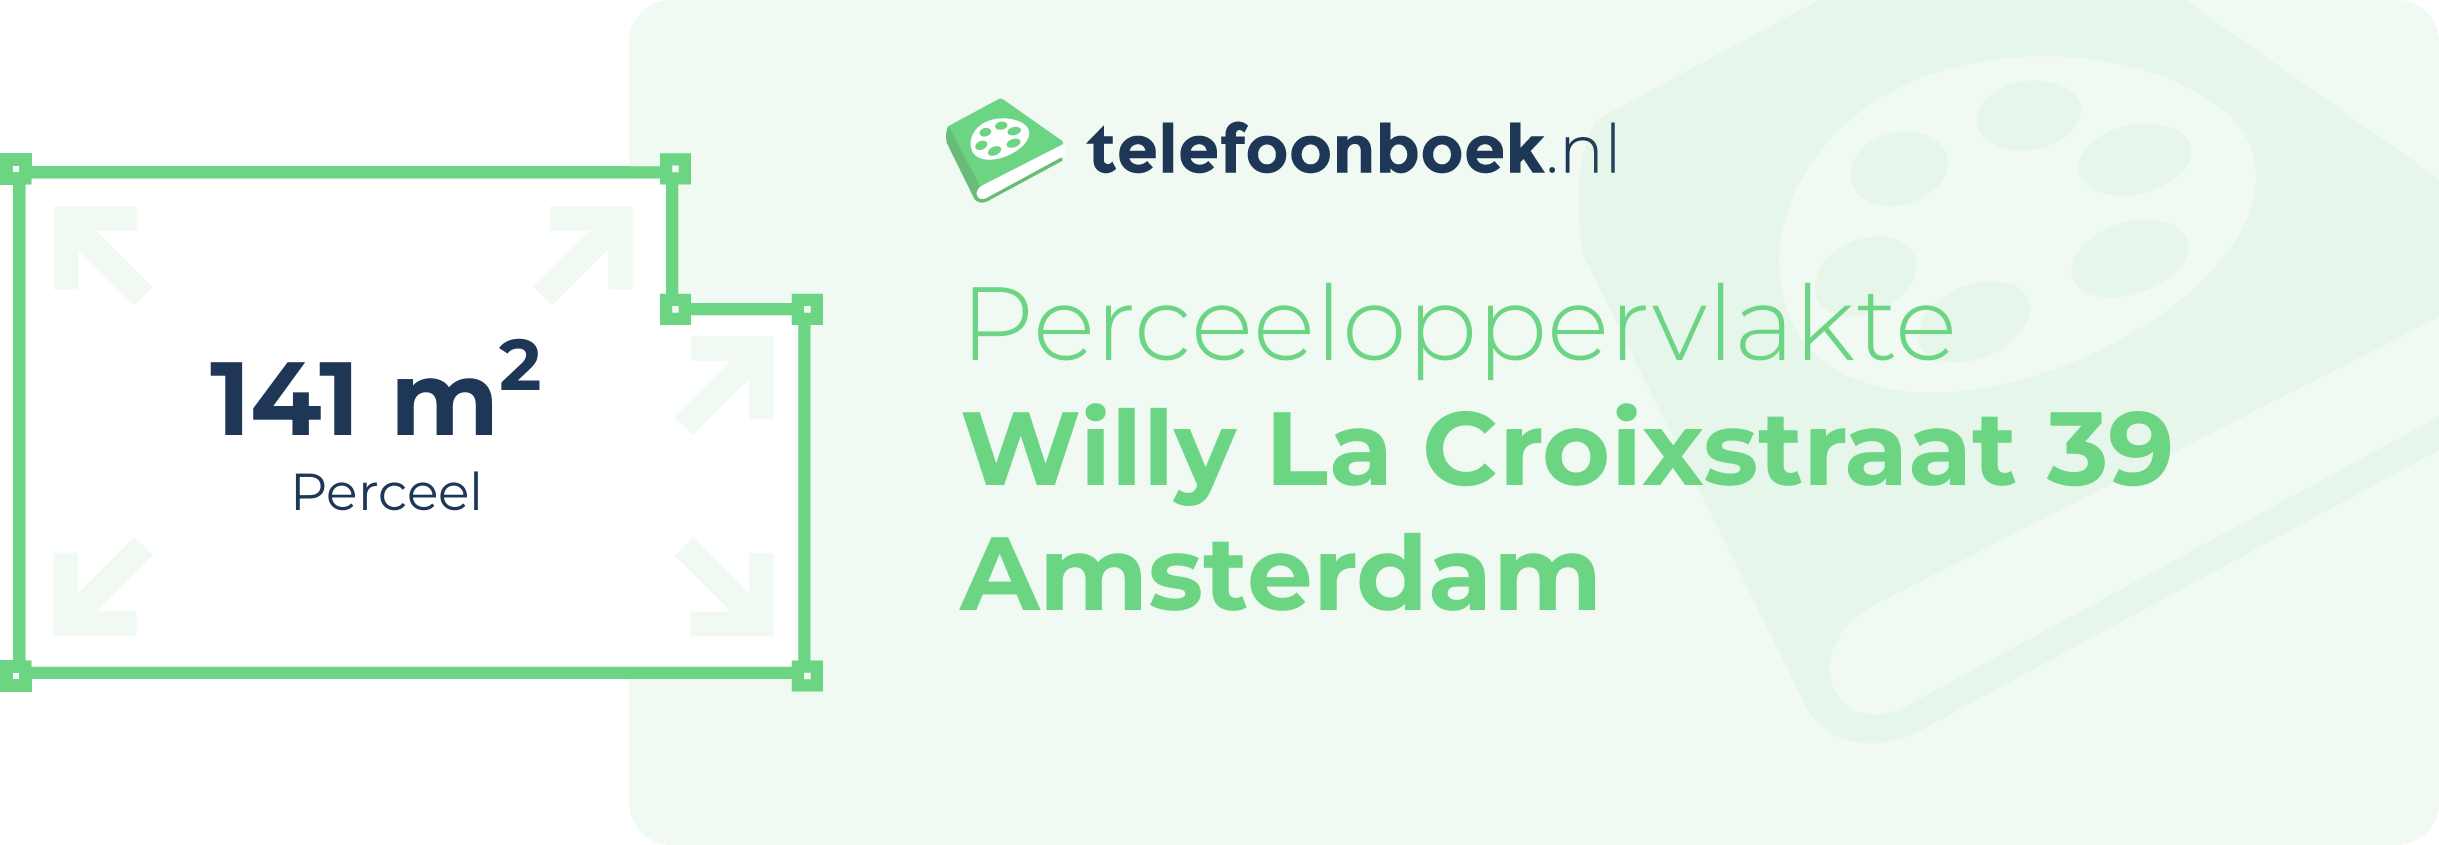 Perceeloppervlakte Willy La Croixstraat 39 Amsterdam